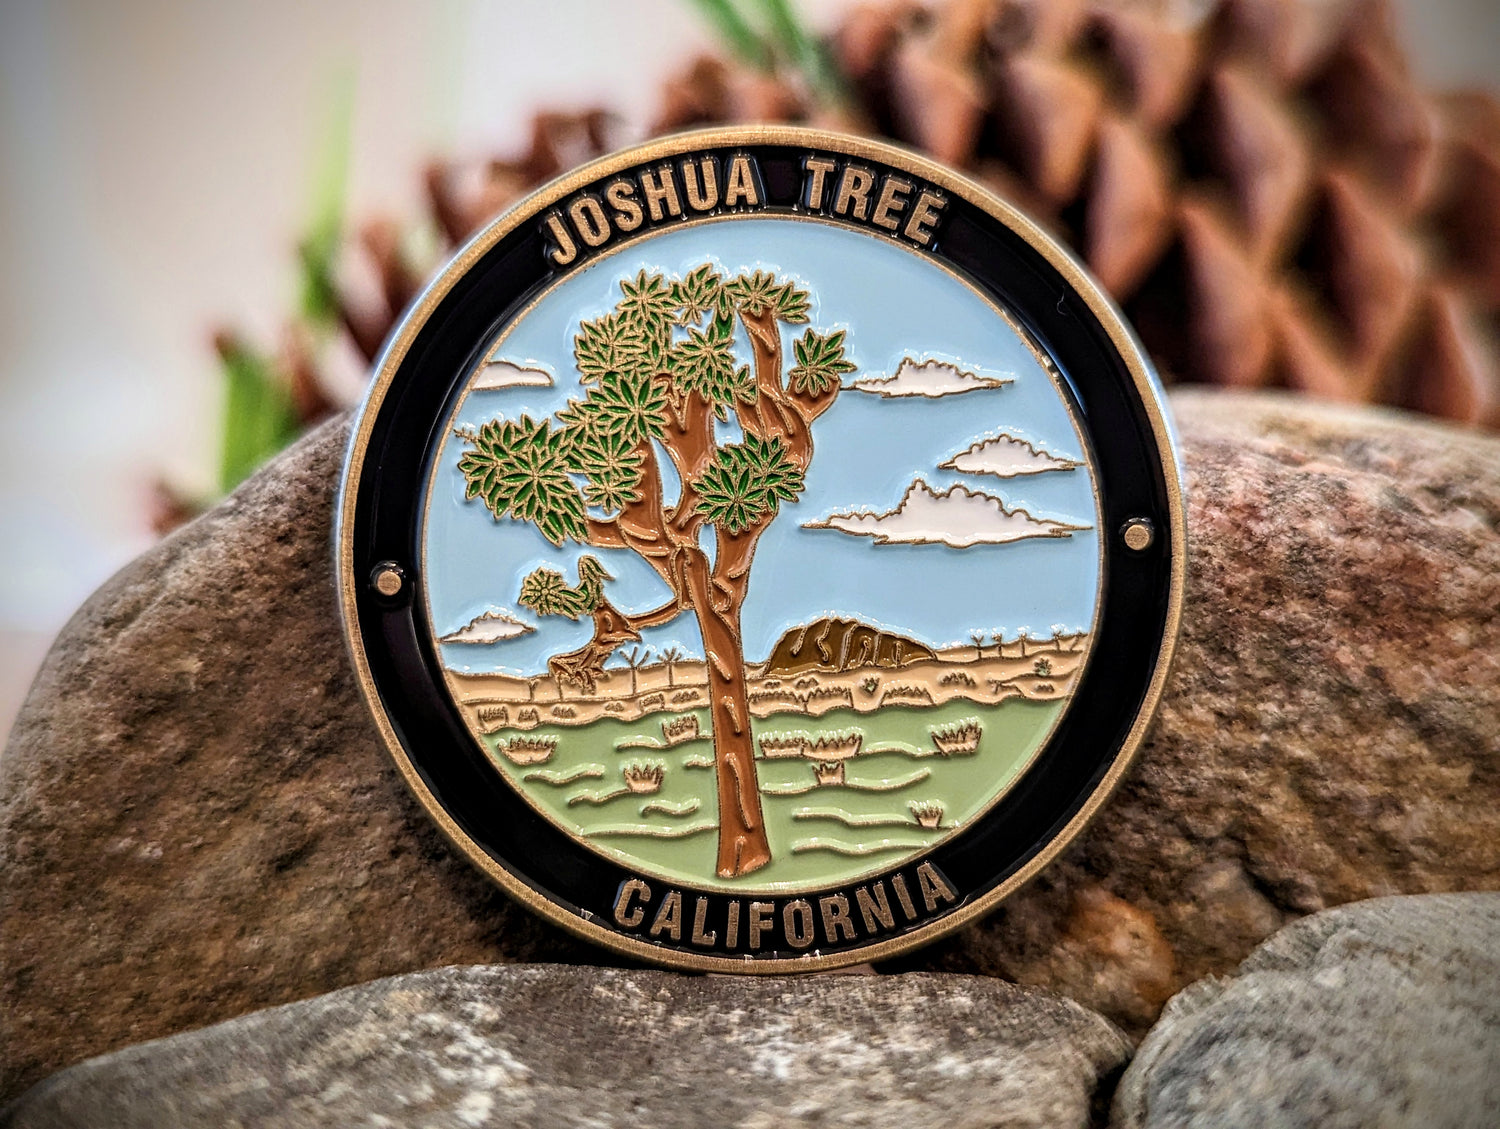 JOSHUA TREE NATIONAL PARK CHALLENGE COIN